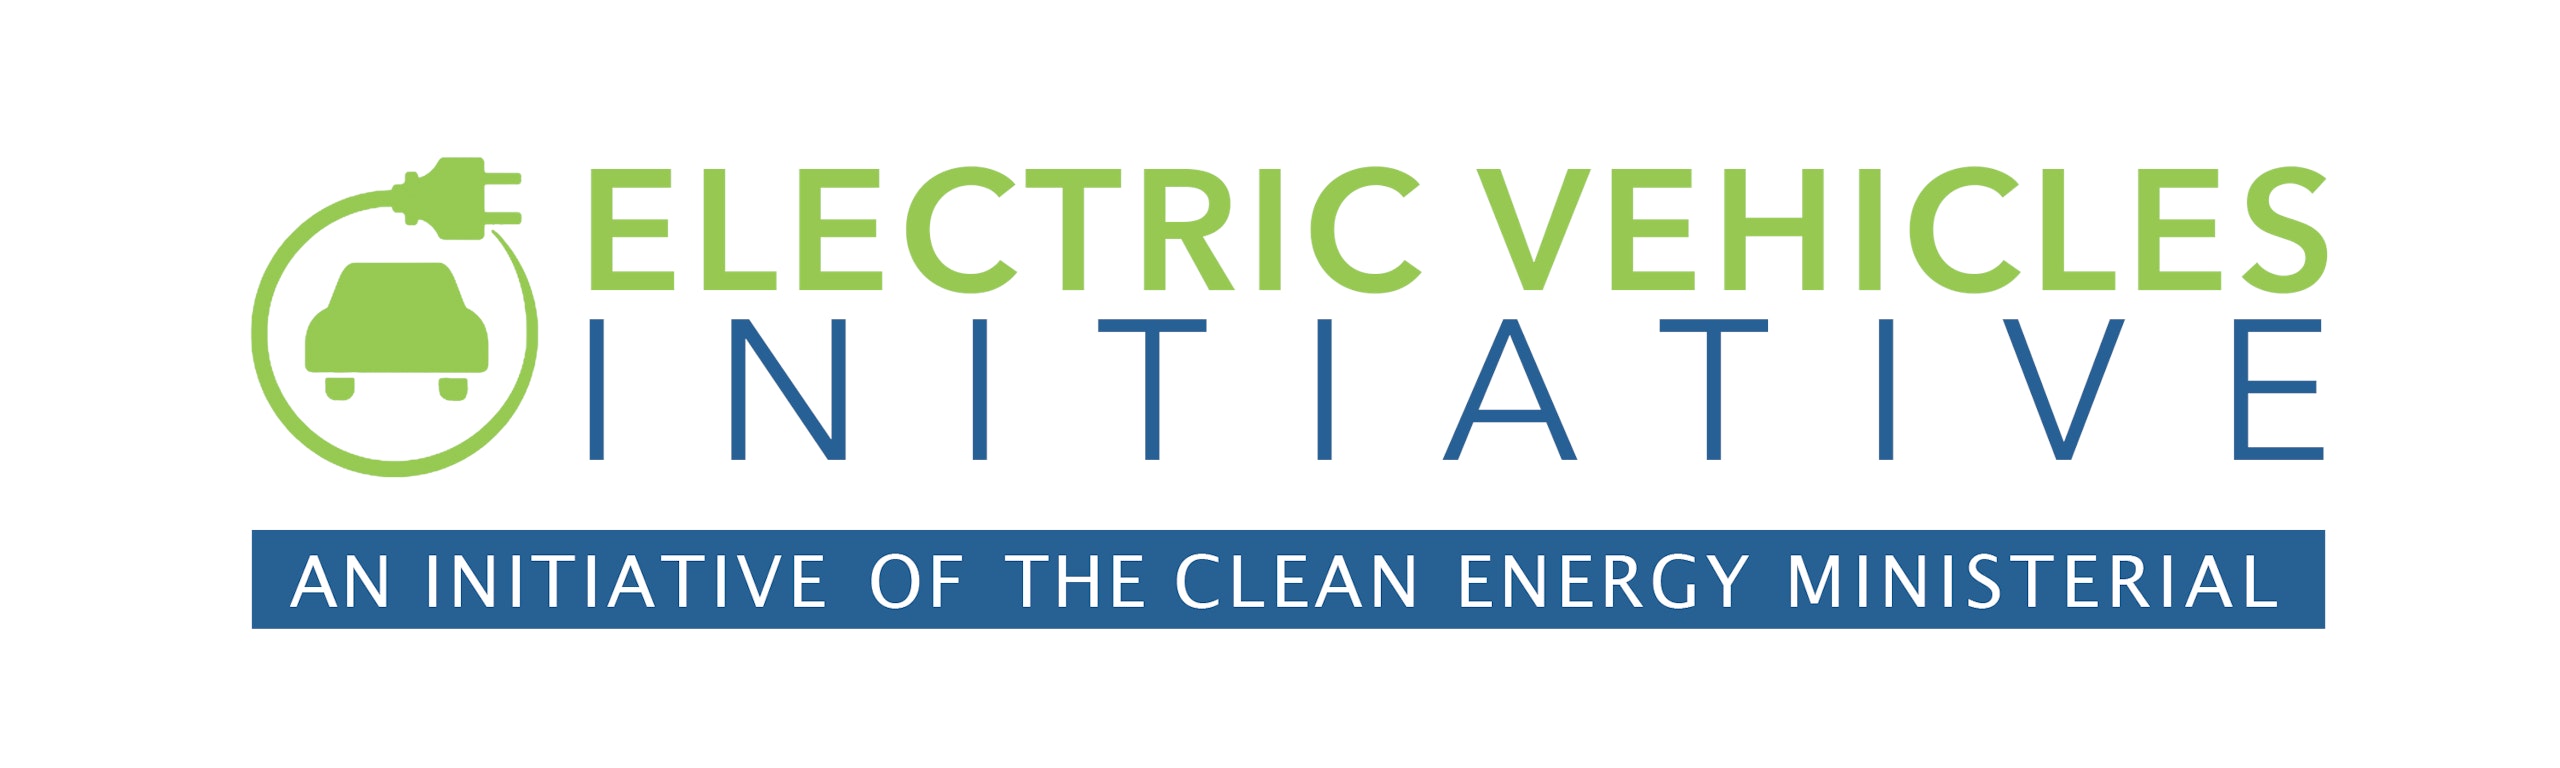 Electric Vehicles Initiative Global EV Outlook 2022 Analysis IEA